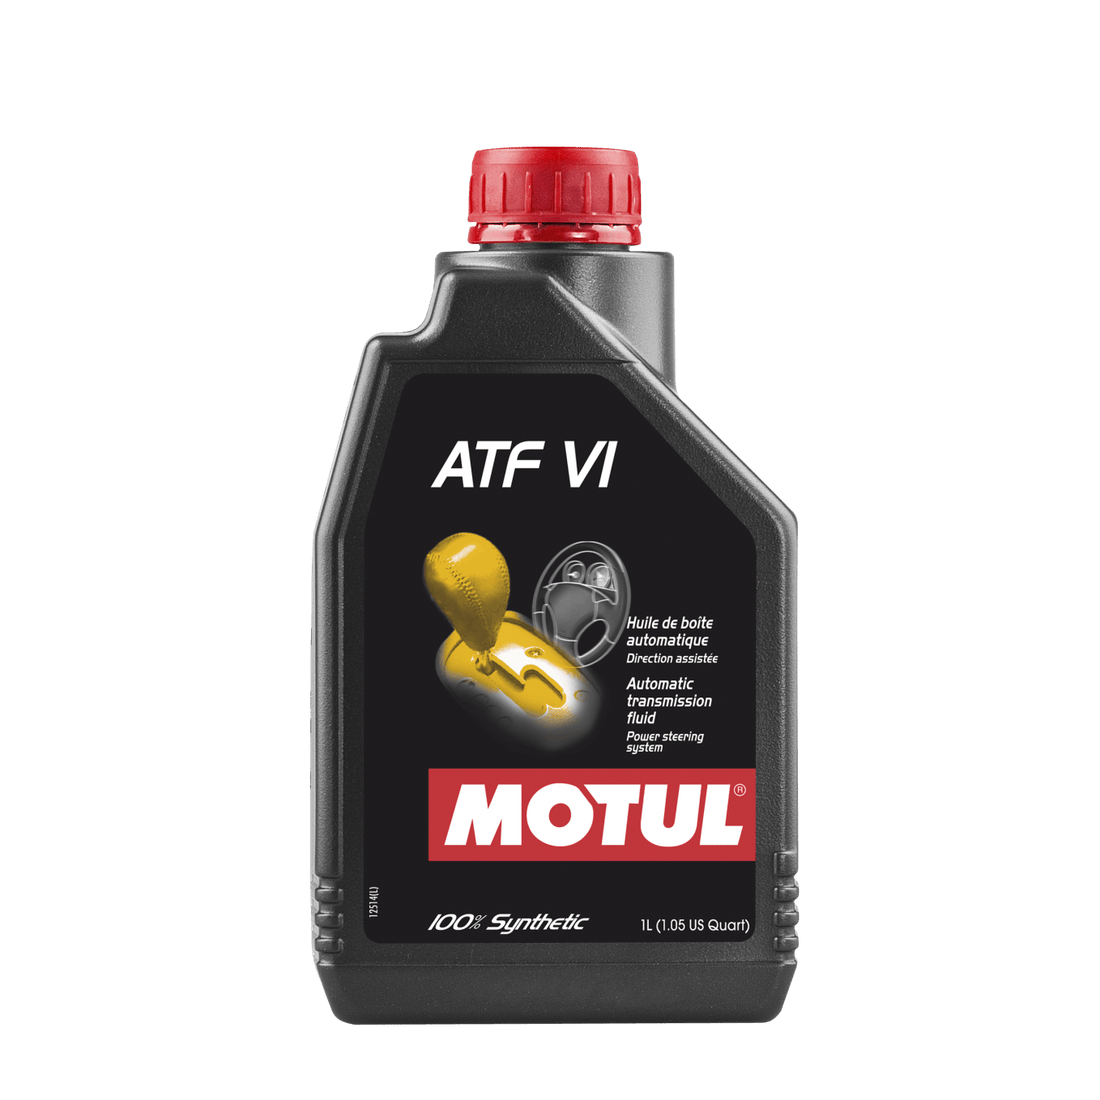 Motul 1L Transmision Fluid ATF VI 100% Synthetic - Saikospeed